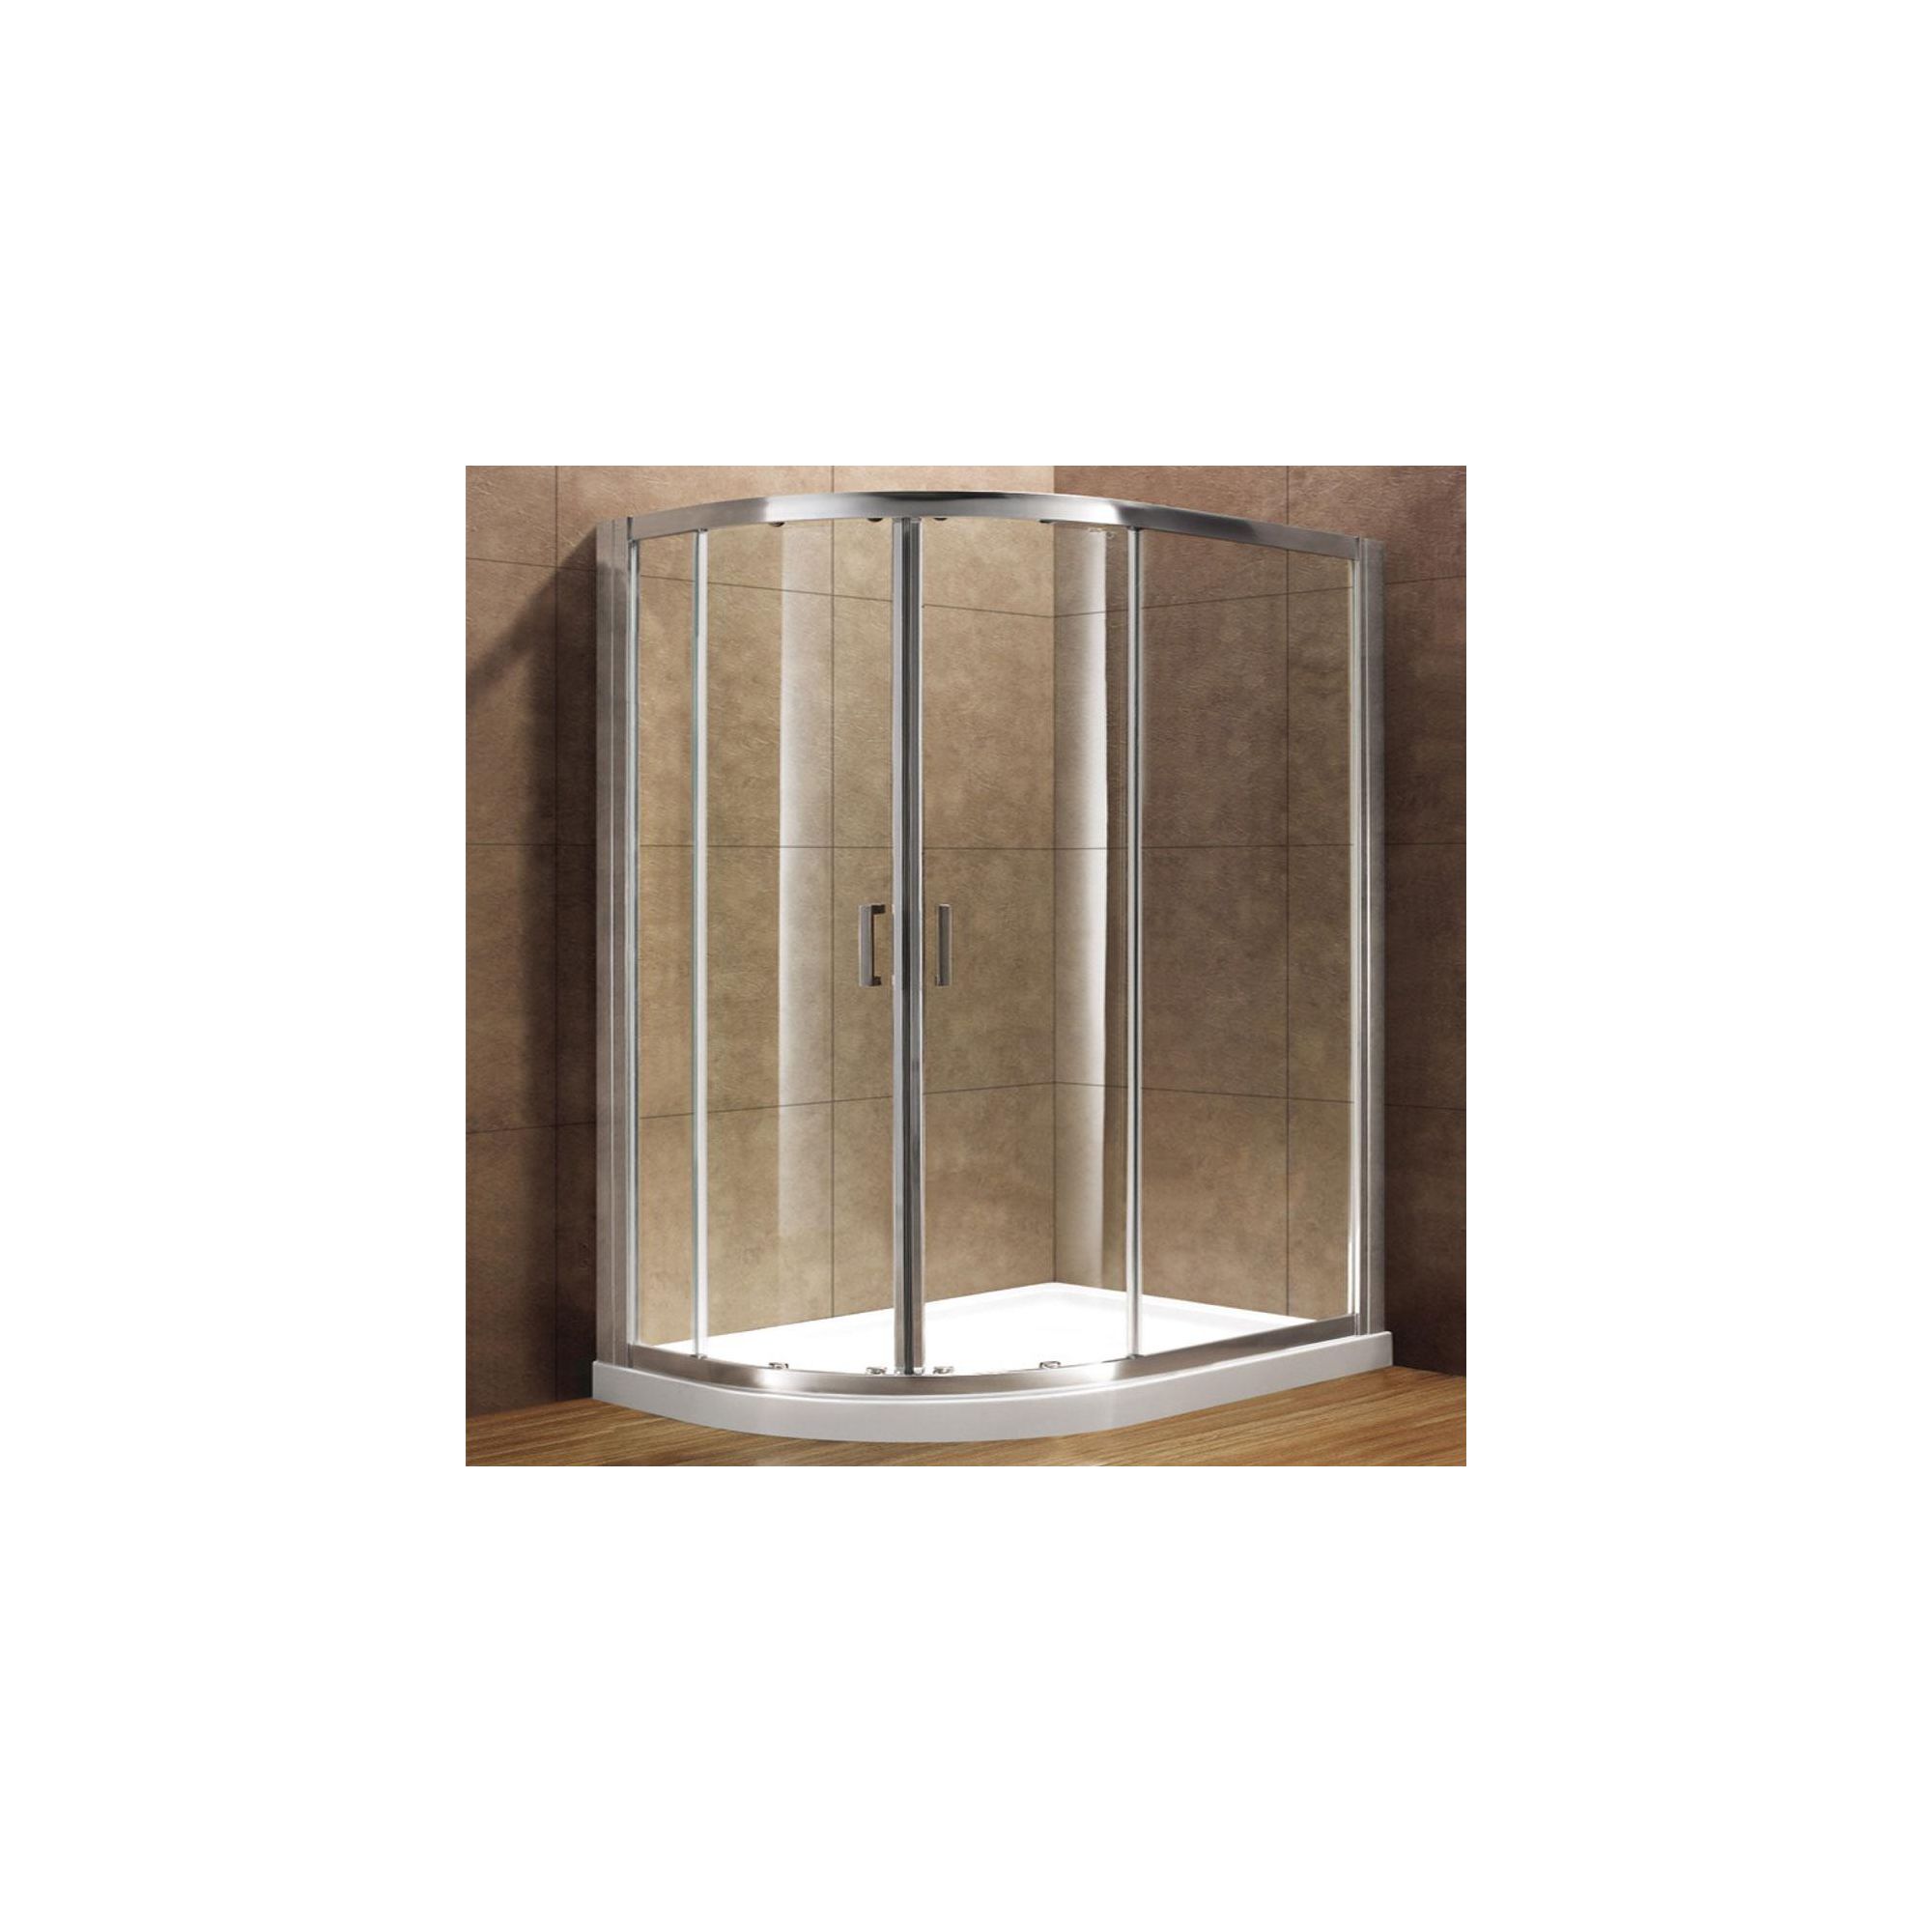 Duchy Premium Double Quadrant Shower Door, 900mm x 900mm, 8mm Glass at Tesco Direct